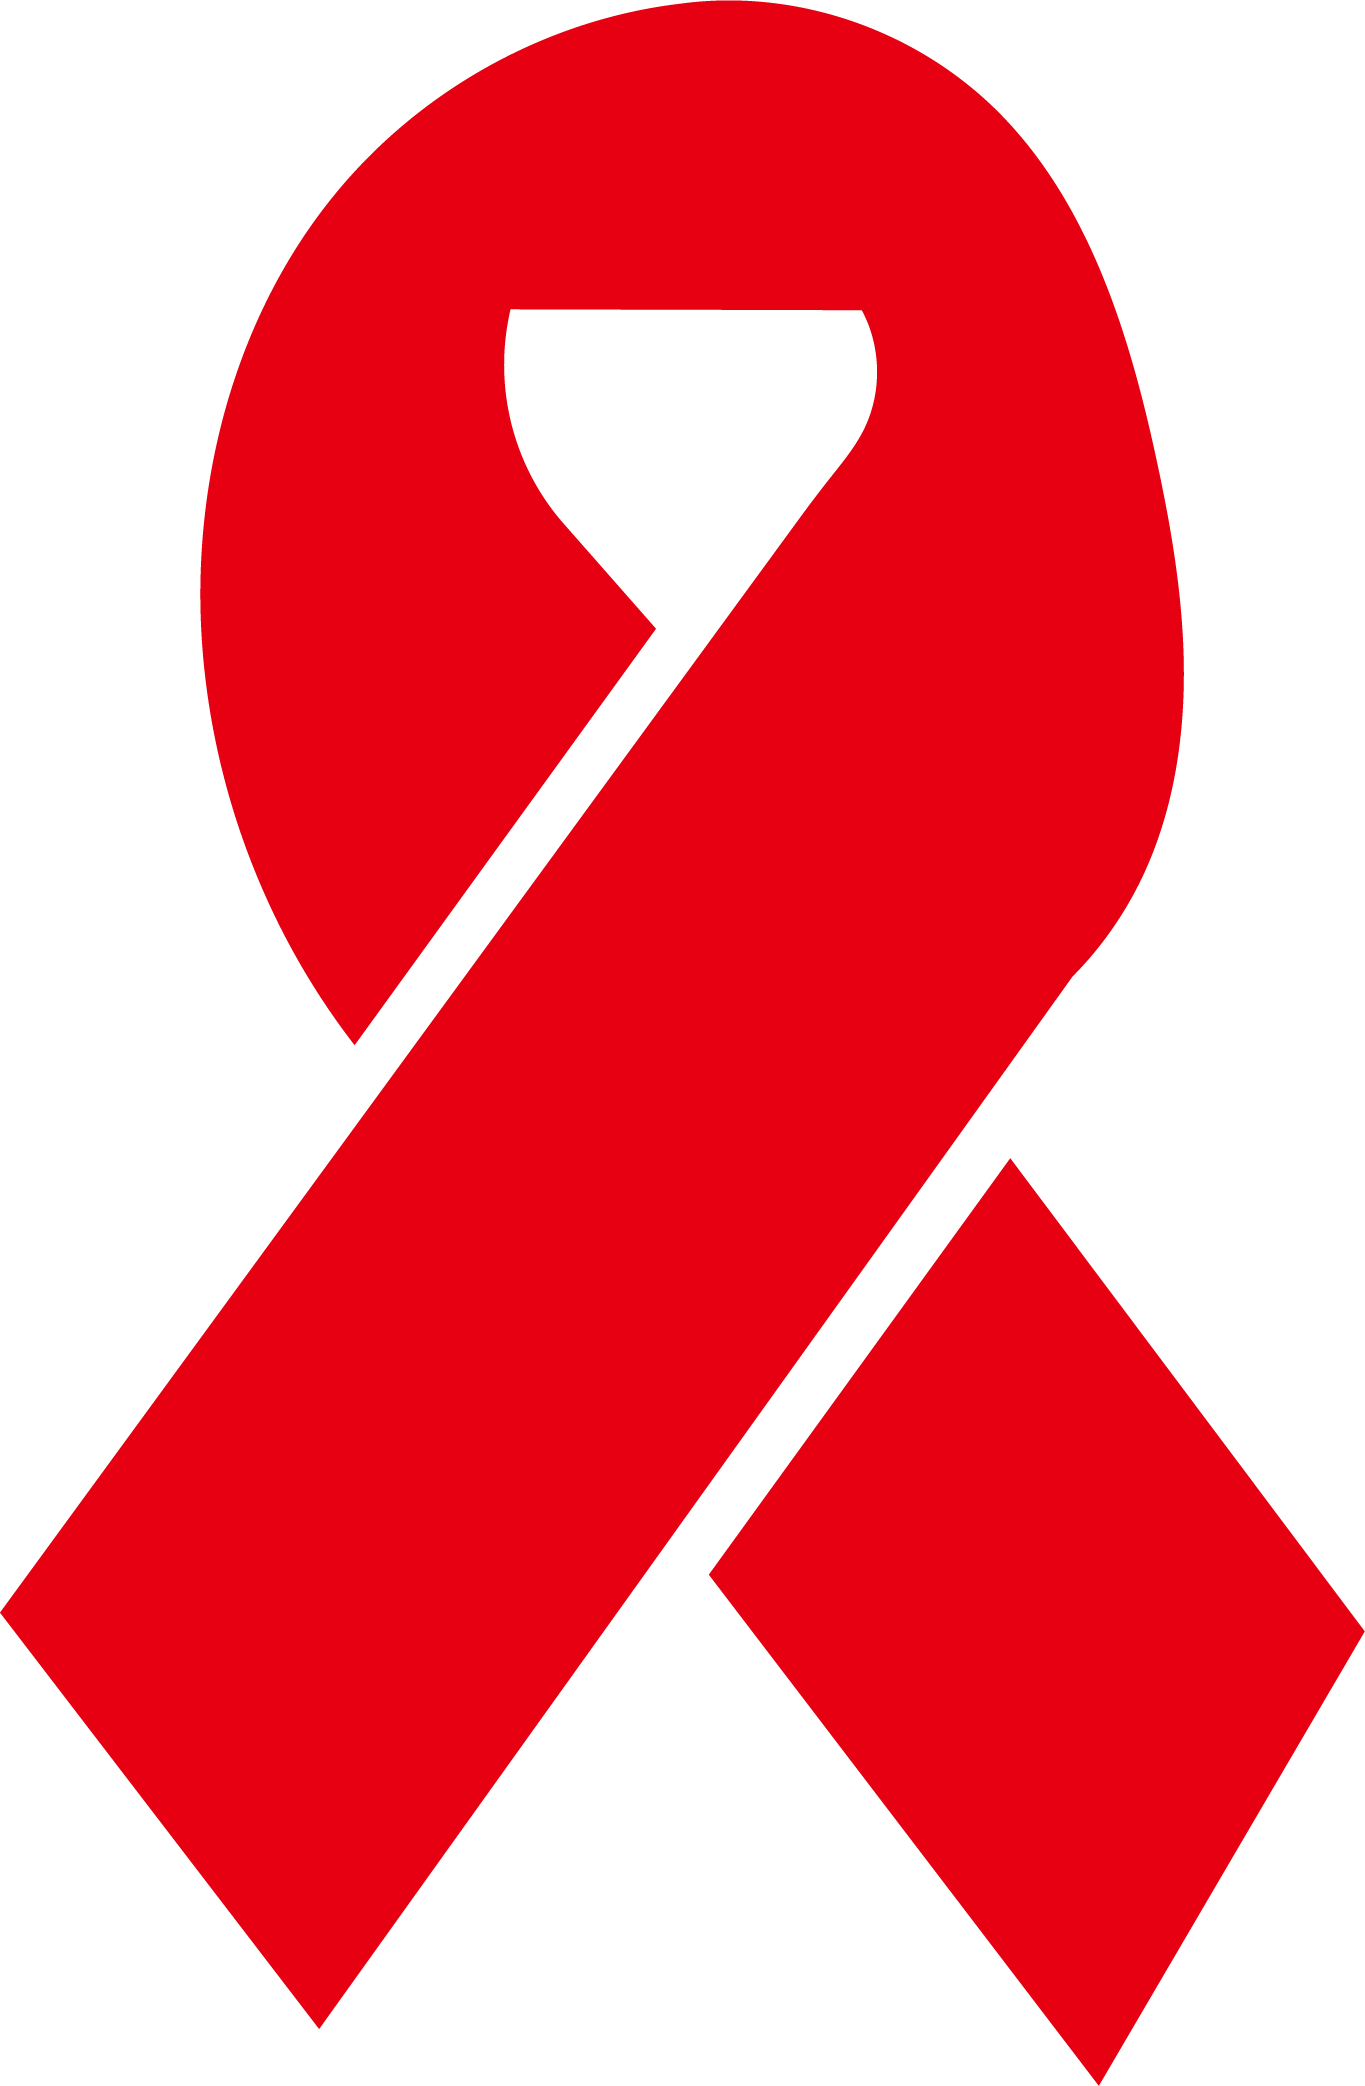 Symbole du cancer PNG Image Transparente